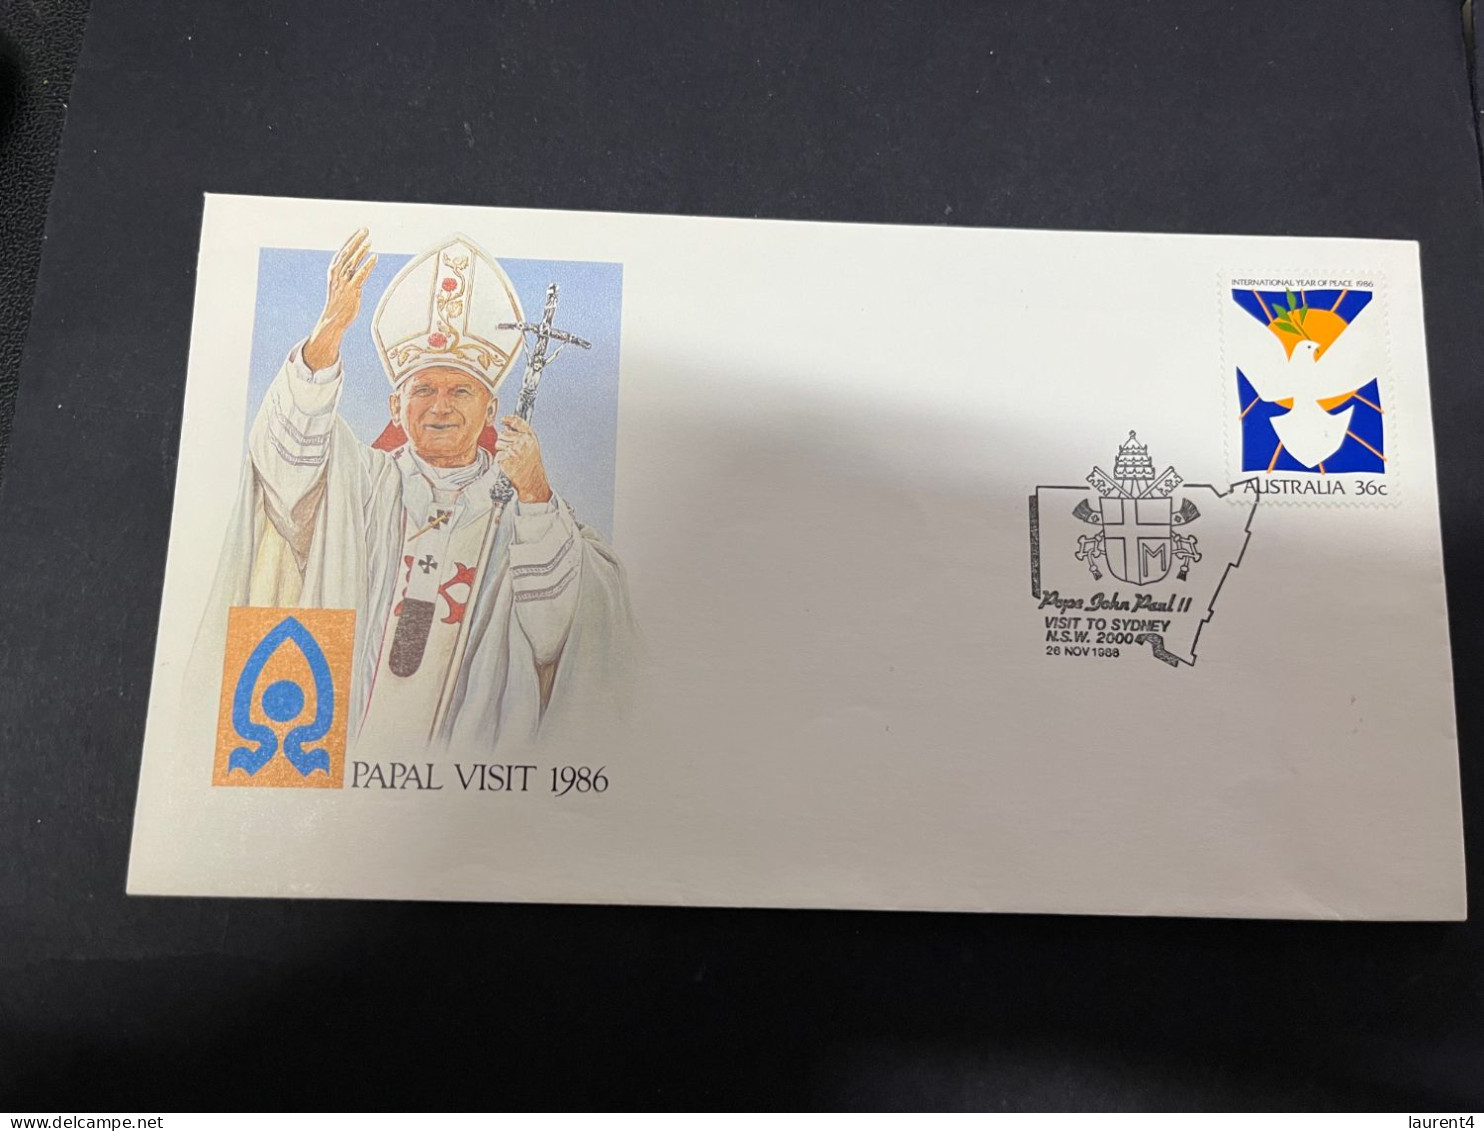 22-4-2024 (2 Z 42) Australia FDC - 1986 - Pope John Paul II Visit To Australia (Sydney P/m) 26-11-1986 - Christianity